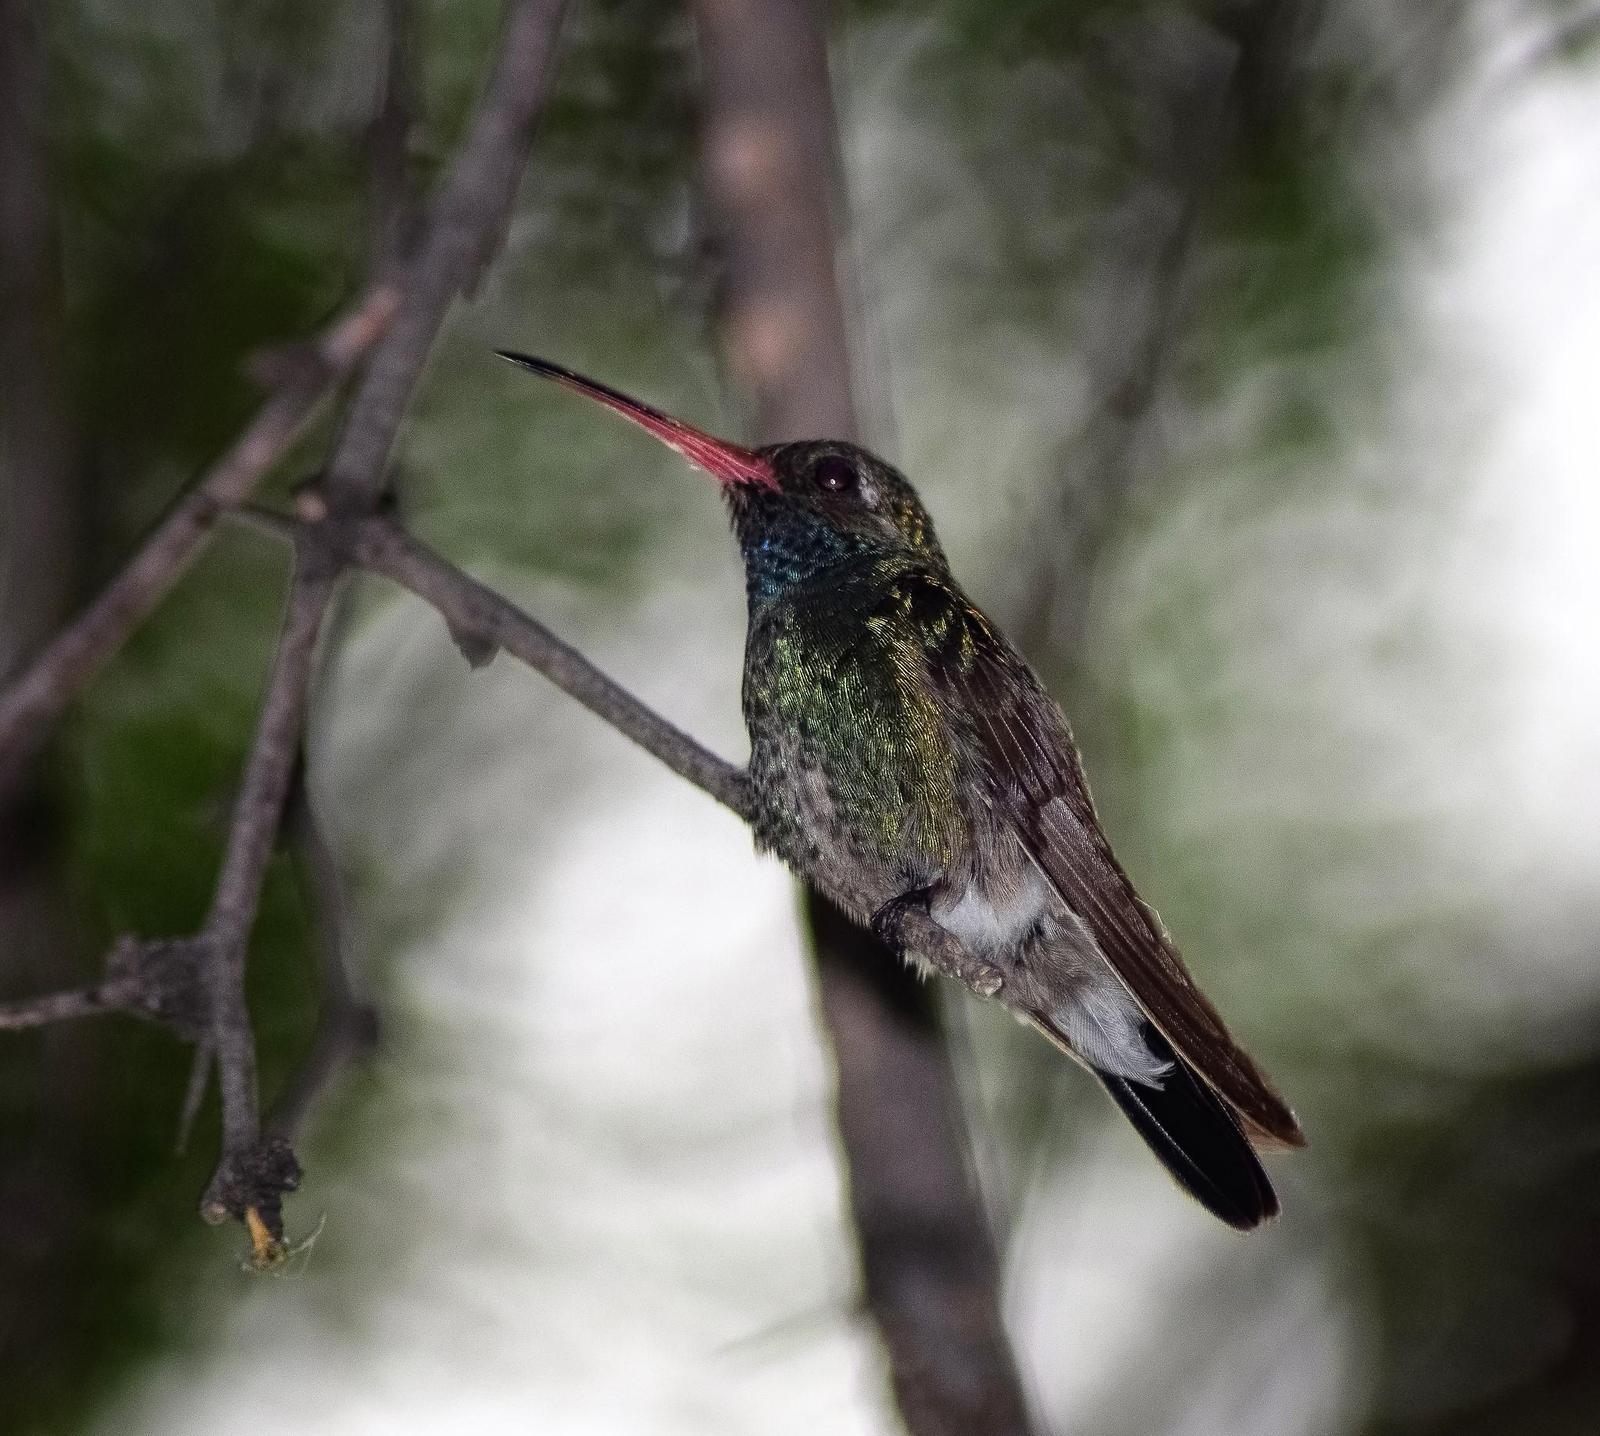 Broad-billed Hummingbird Photo by Laura A. Martínez Cantú